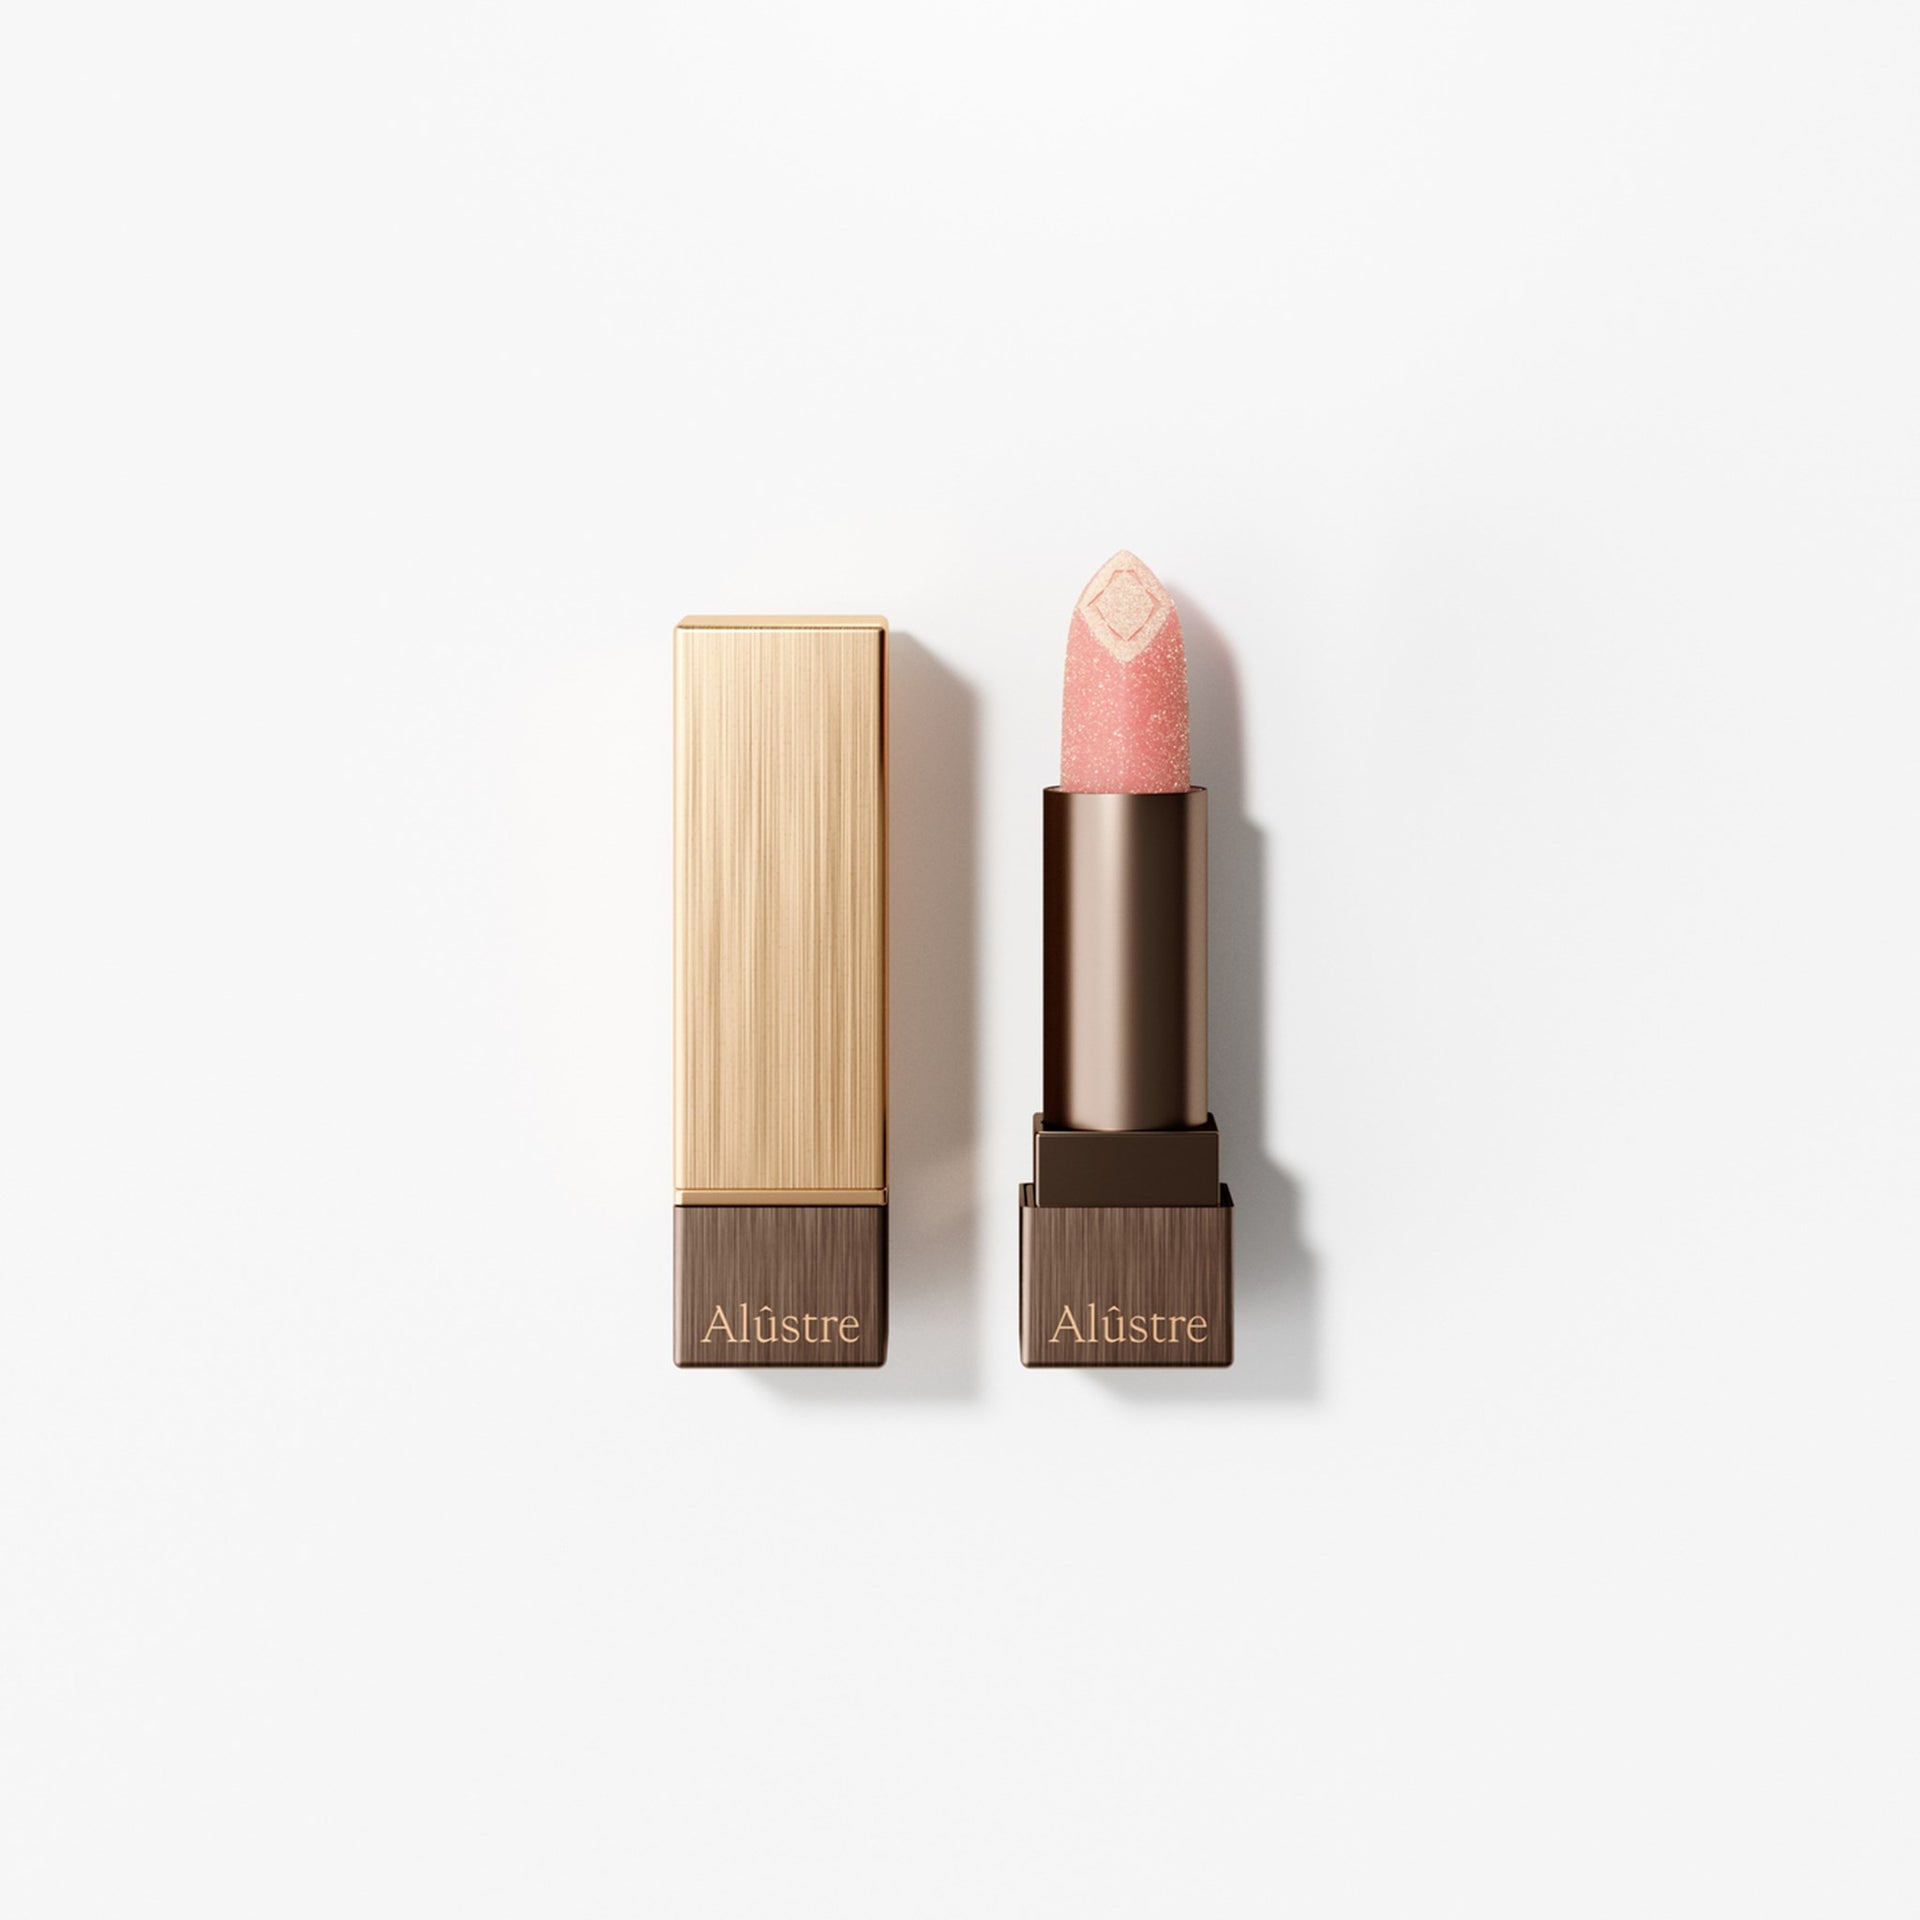 The Original Lipstick | NARS Cosmetics